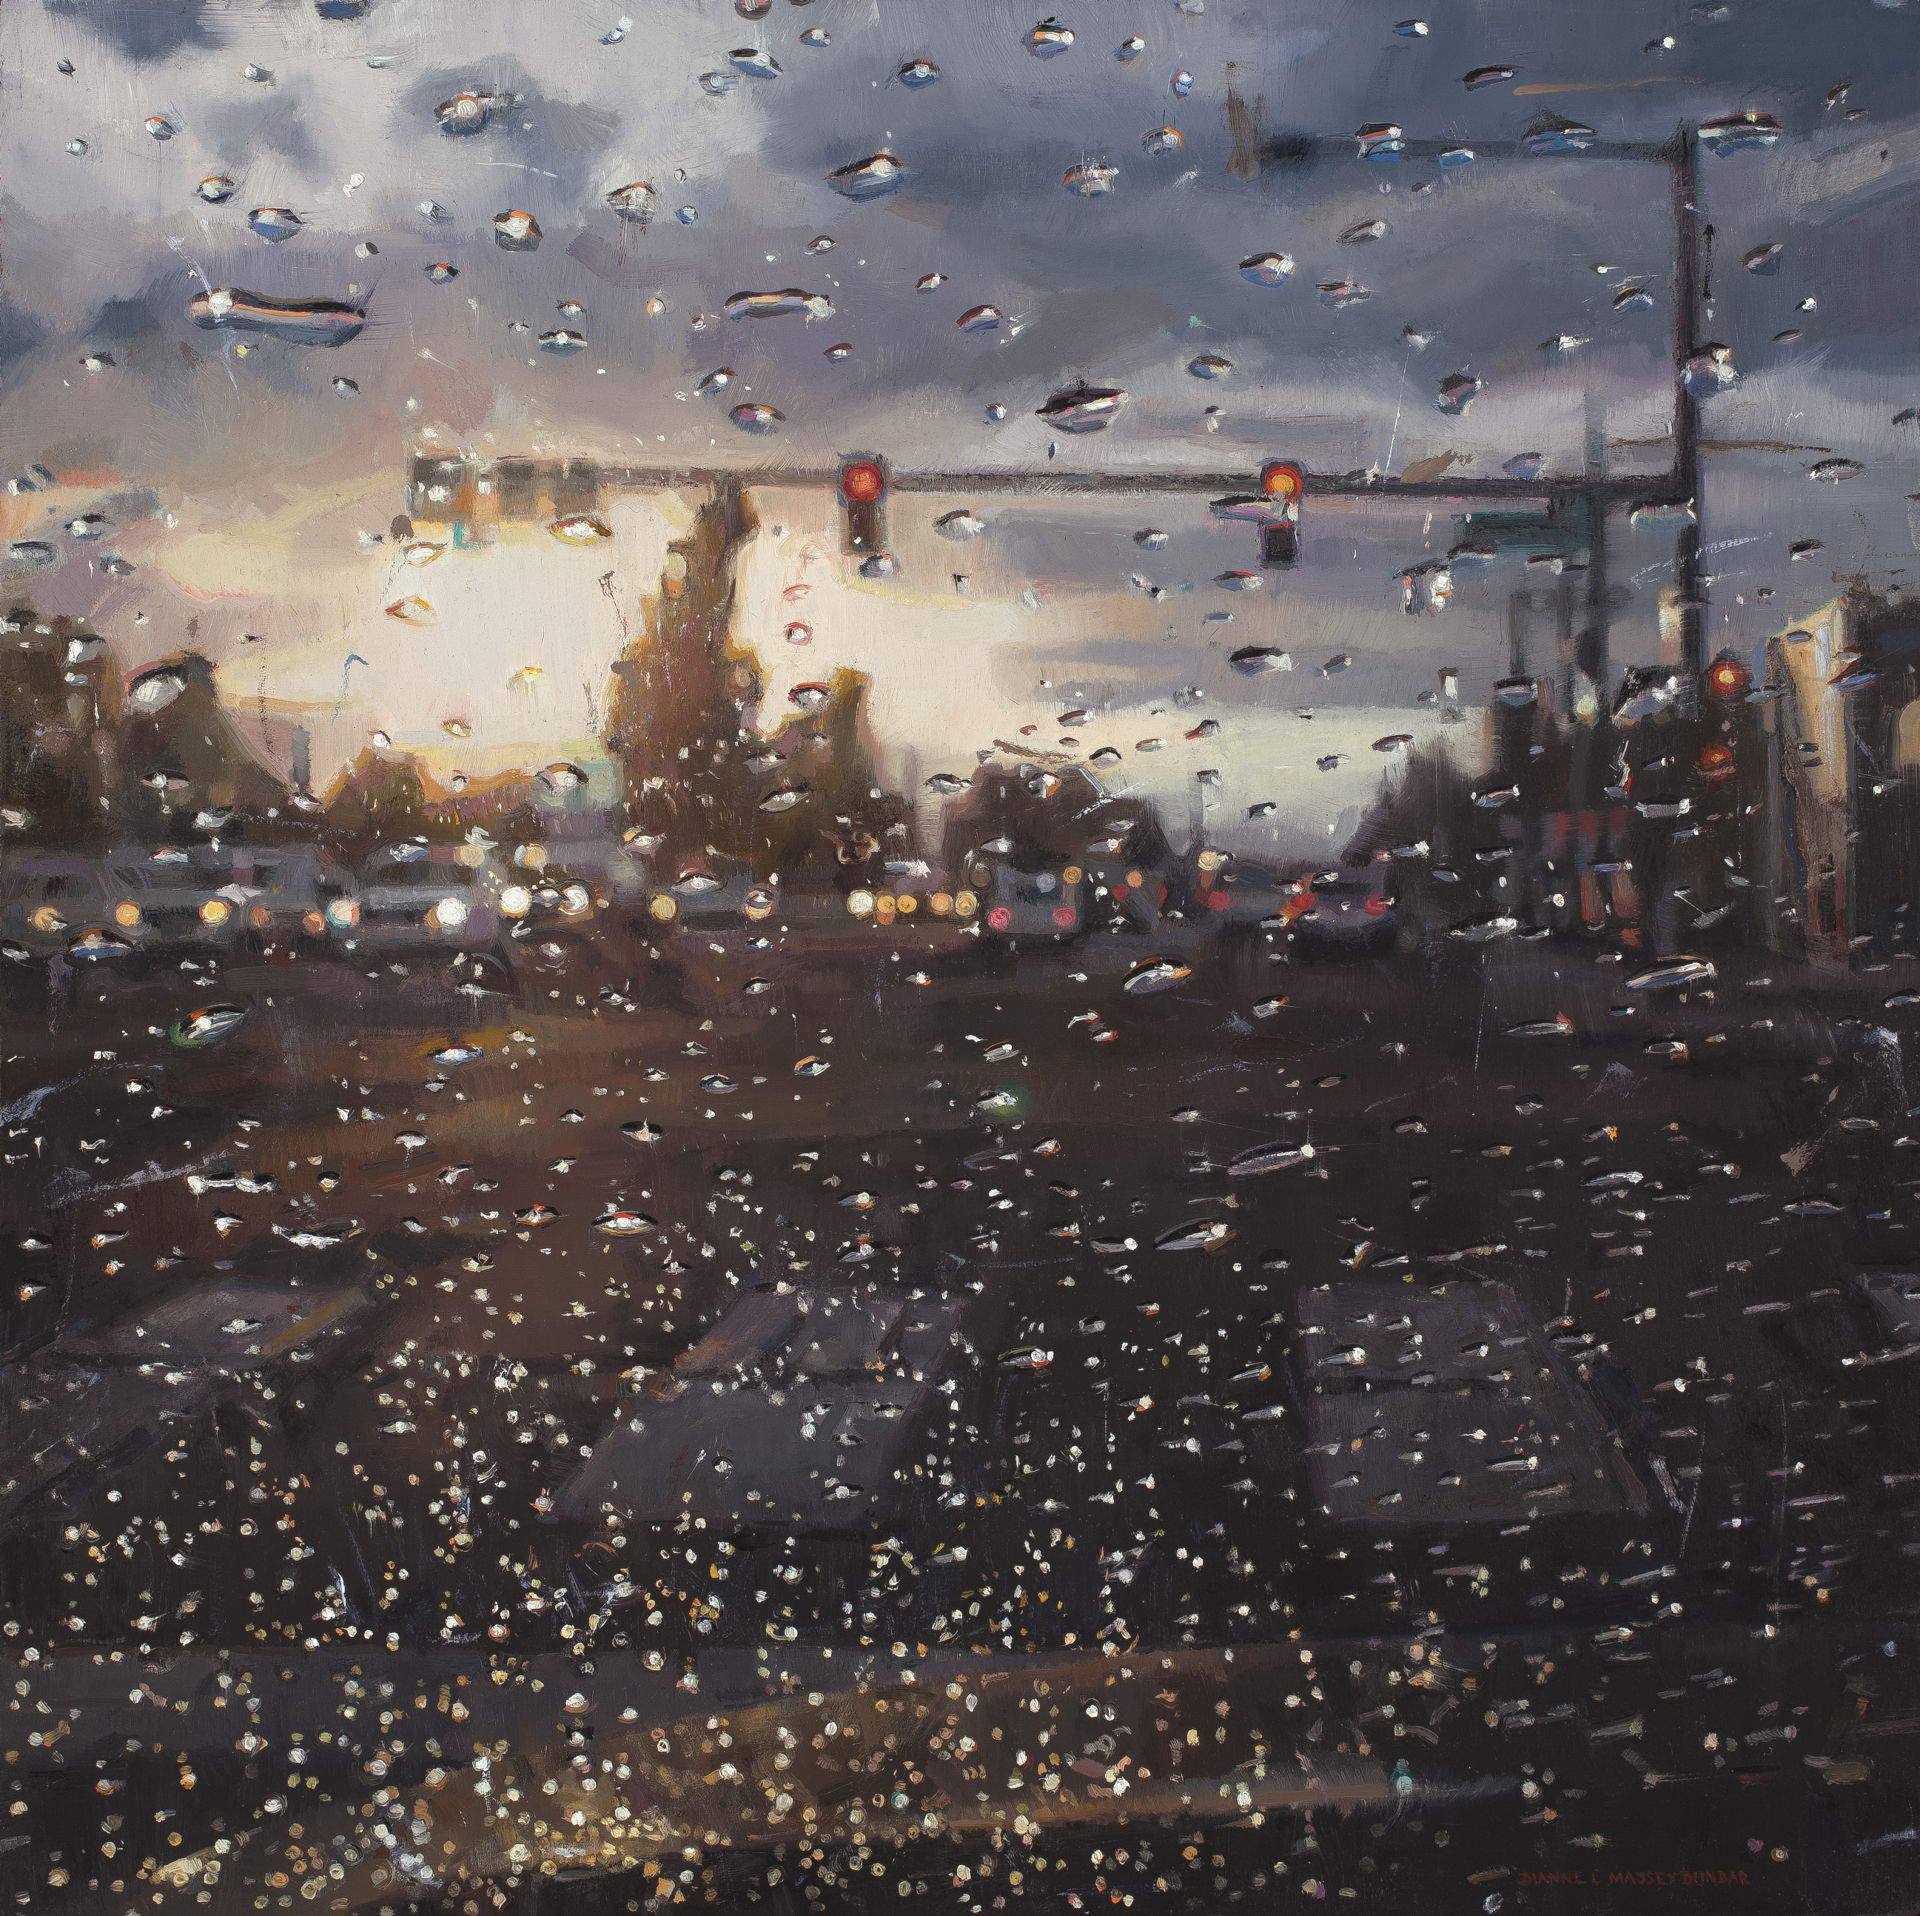 Rain on Windshield: Morning Commute by Dianne L Massey Dunbar